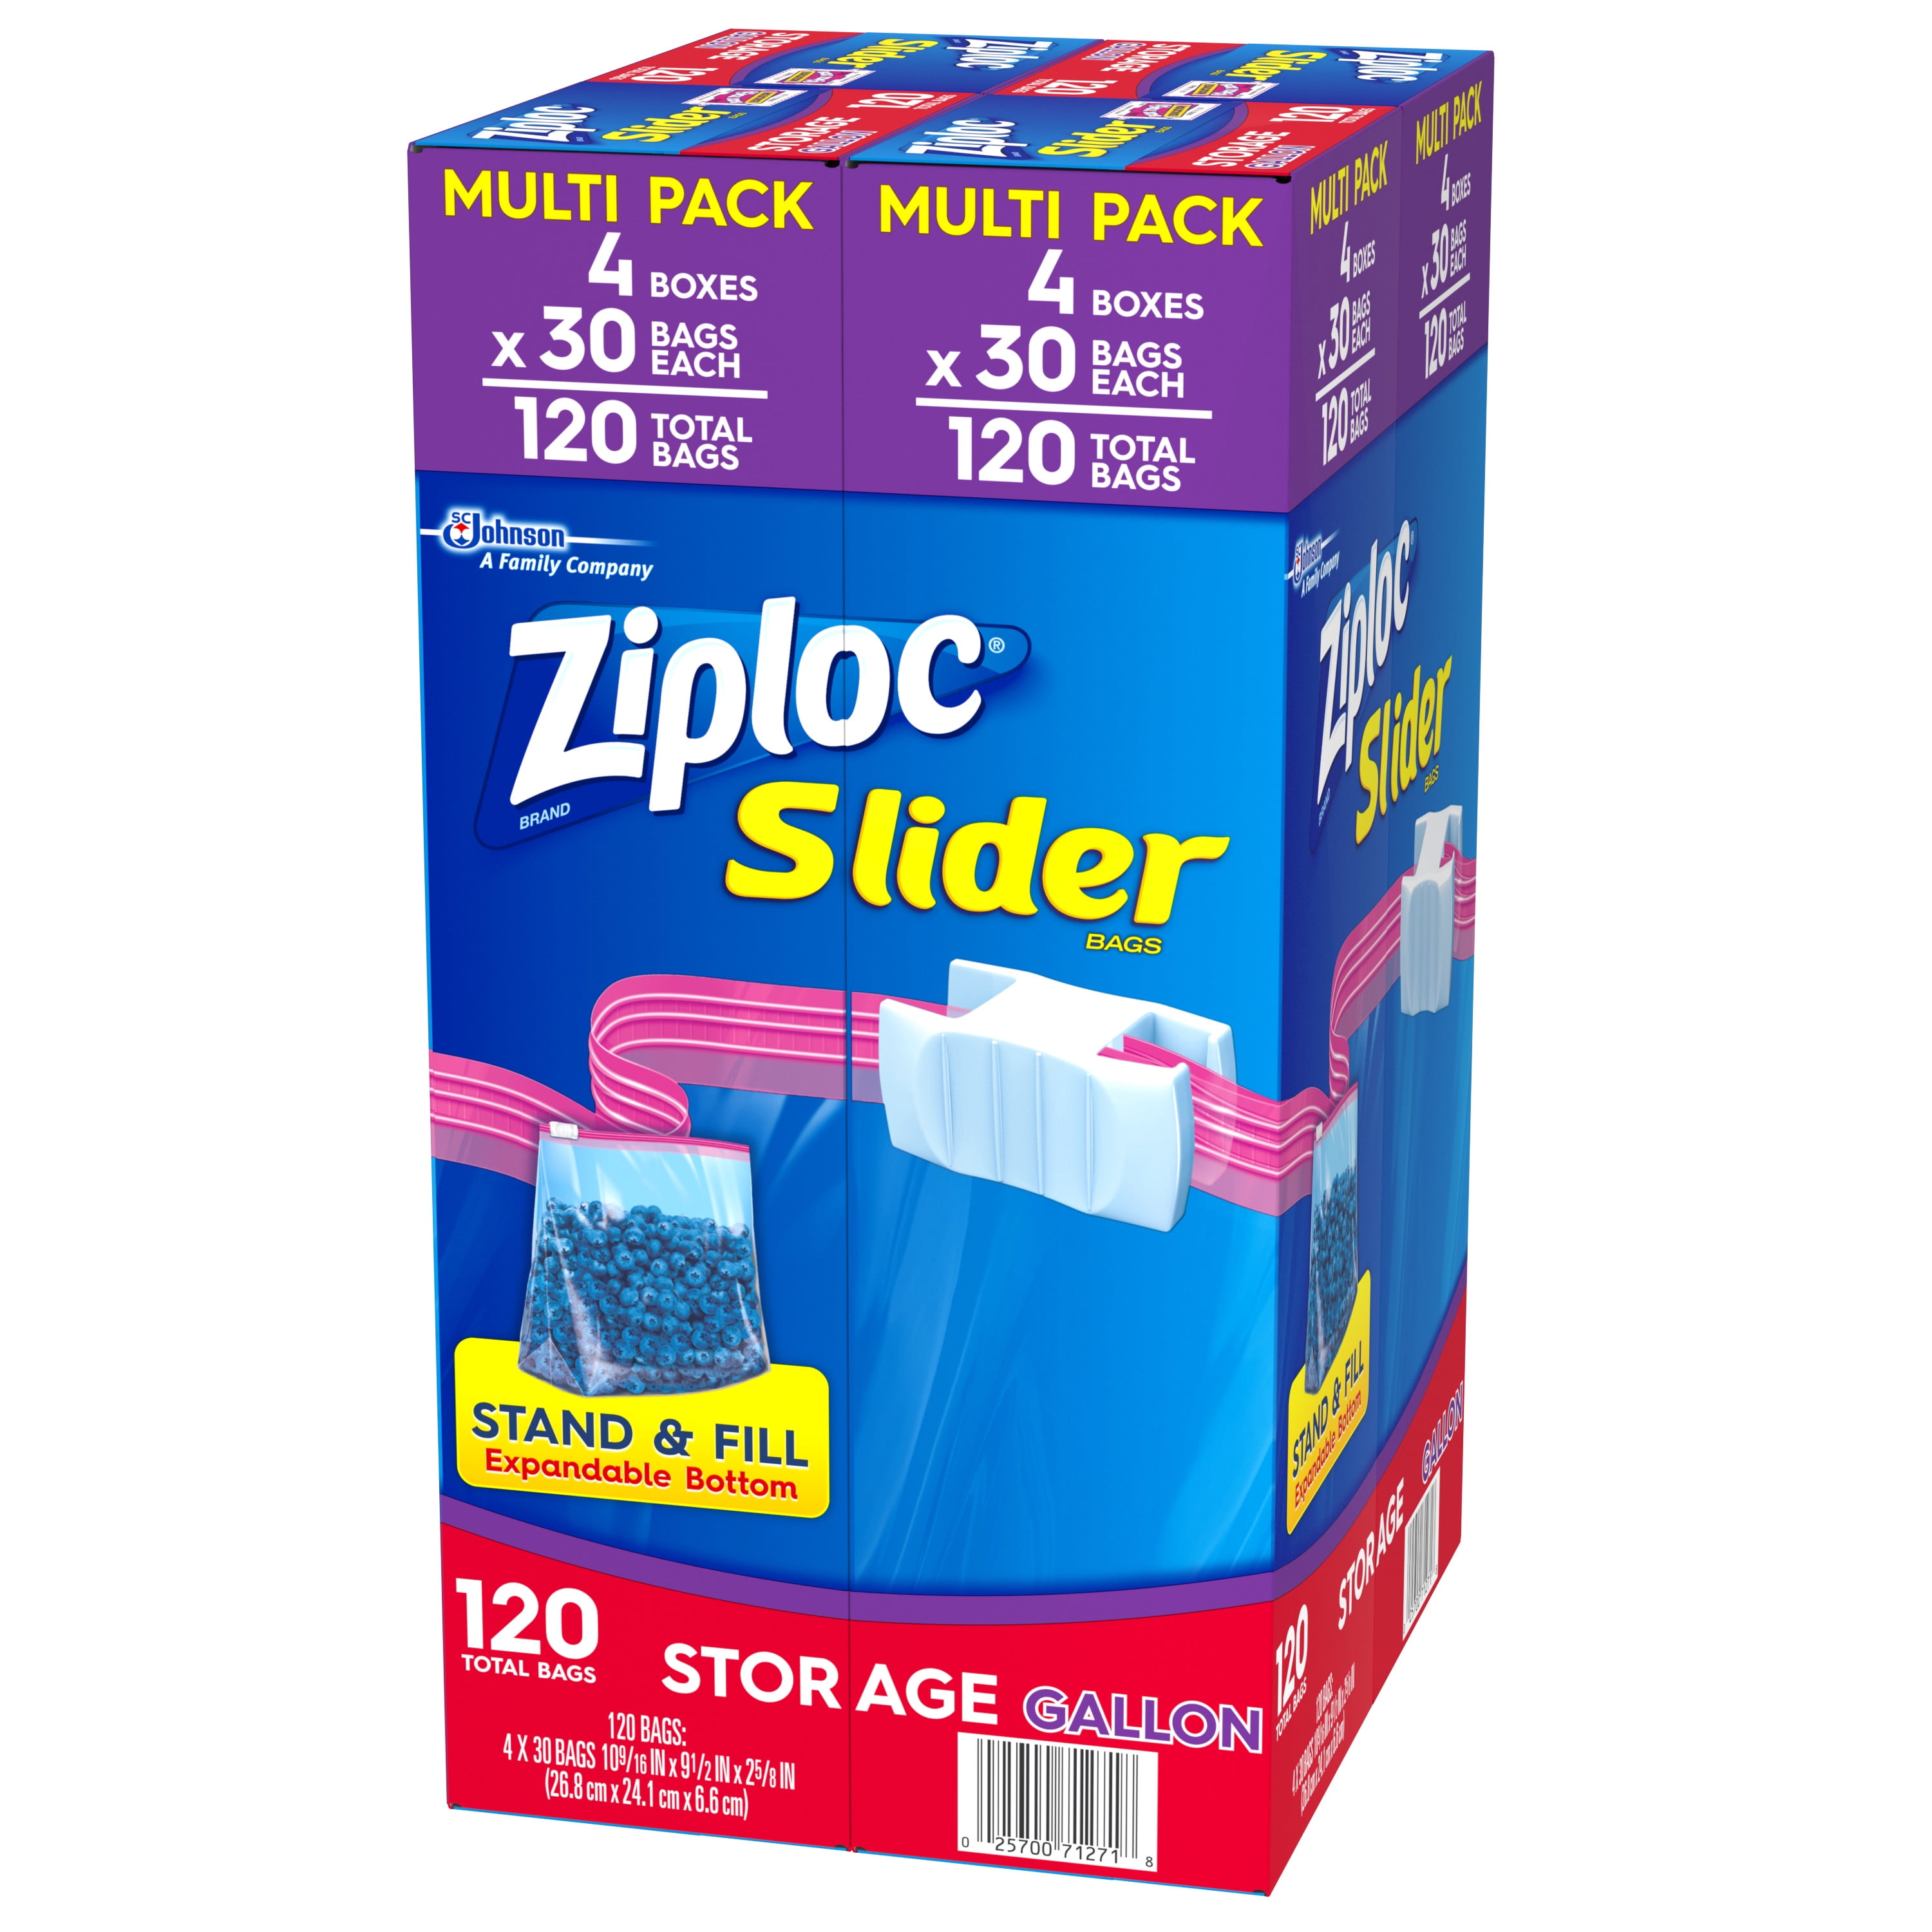 Ziploc Slider Storage Bags, 1 qt, 5.88 x 7.88, Clear, 76 Bags